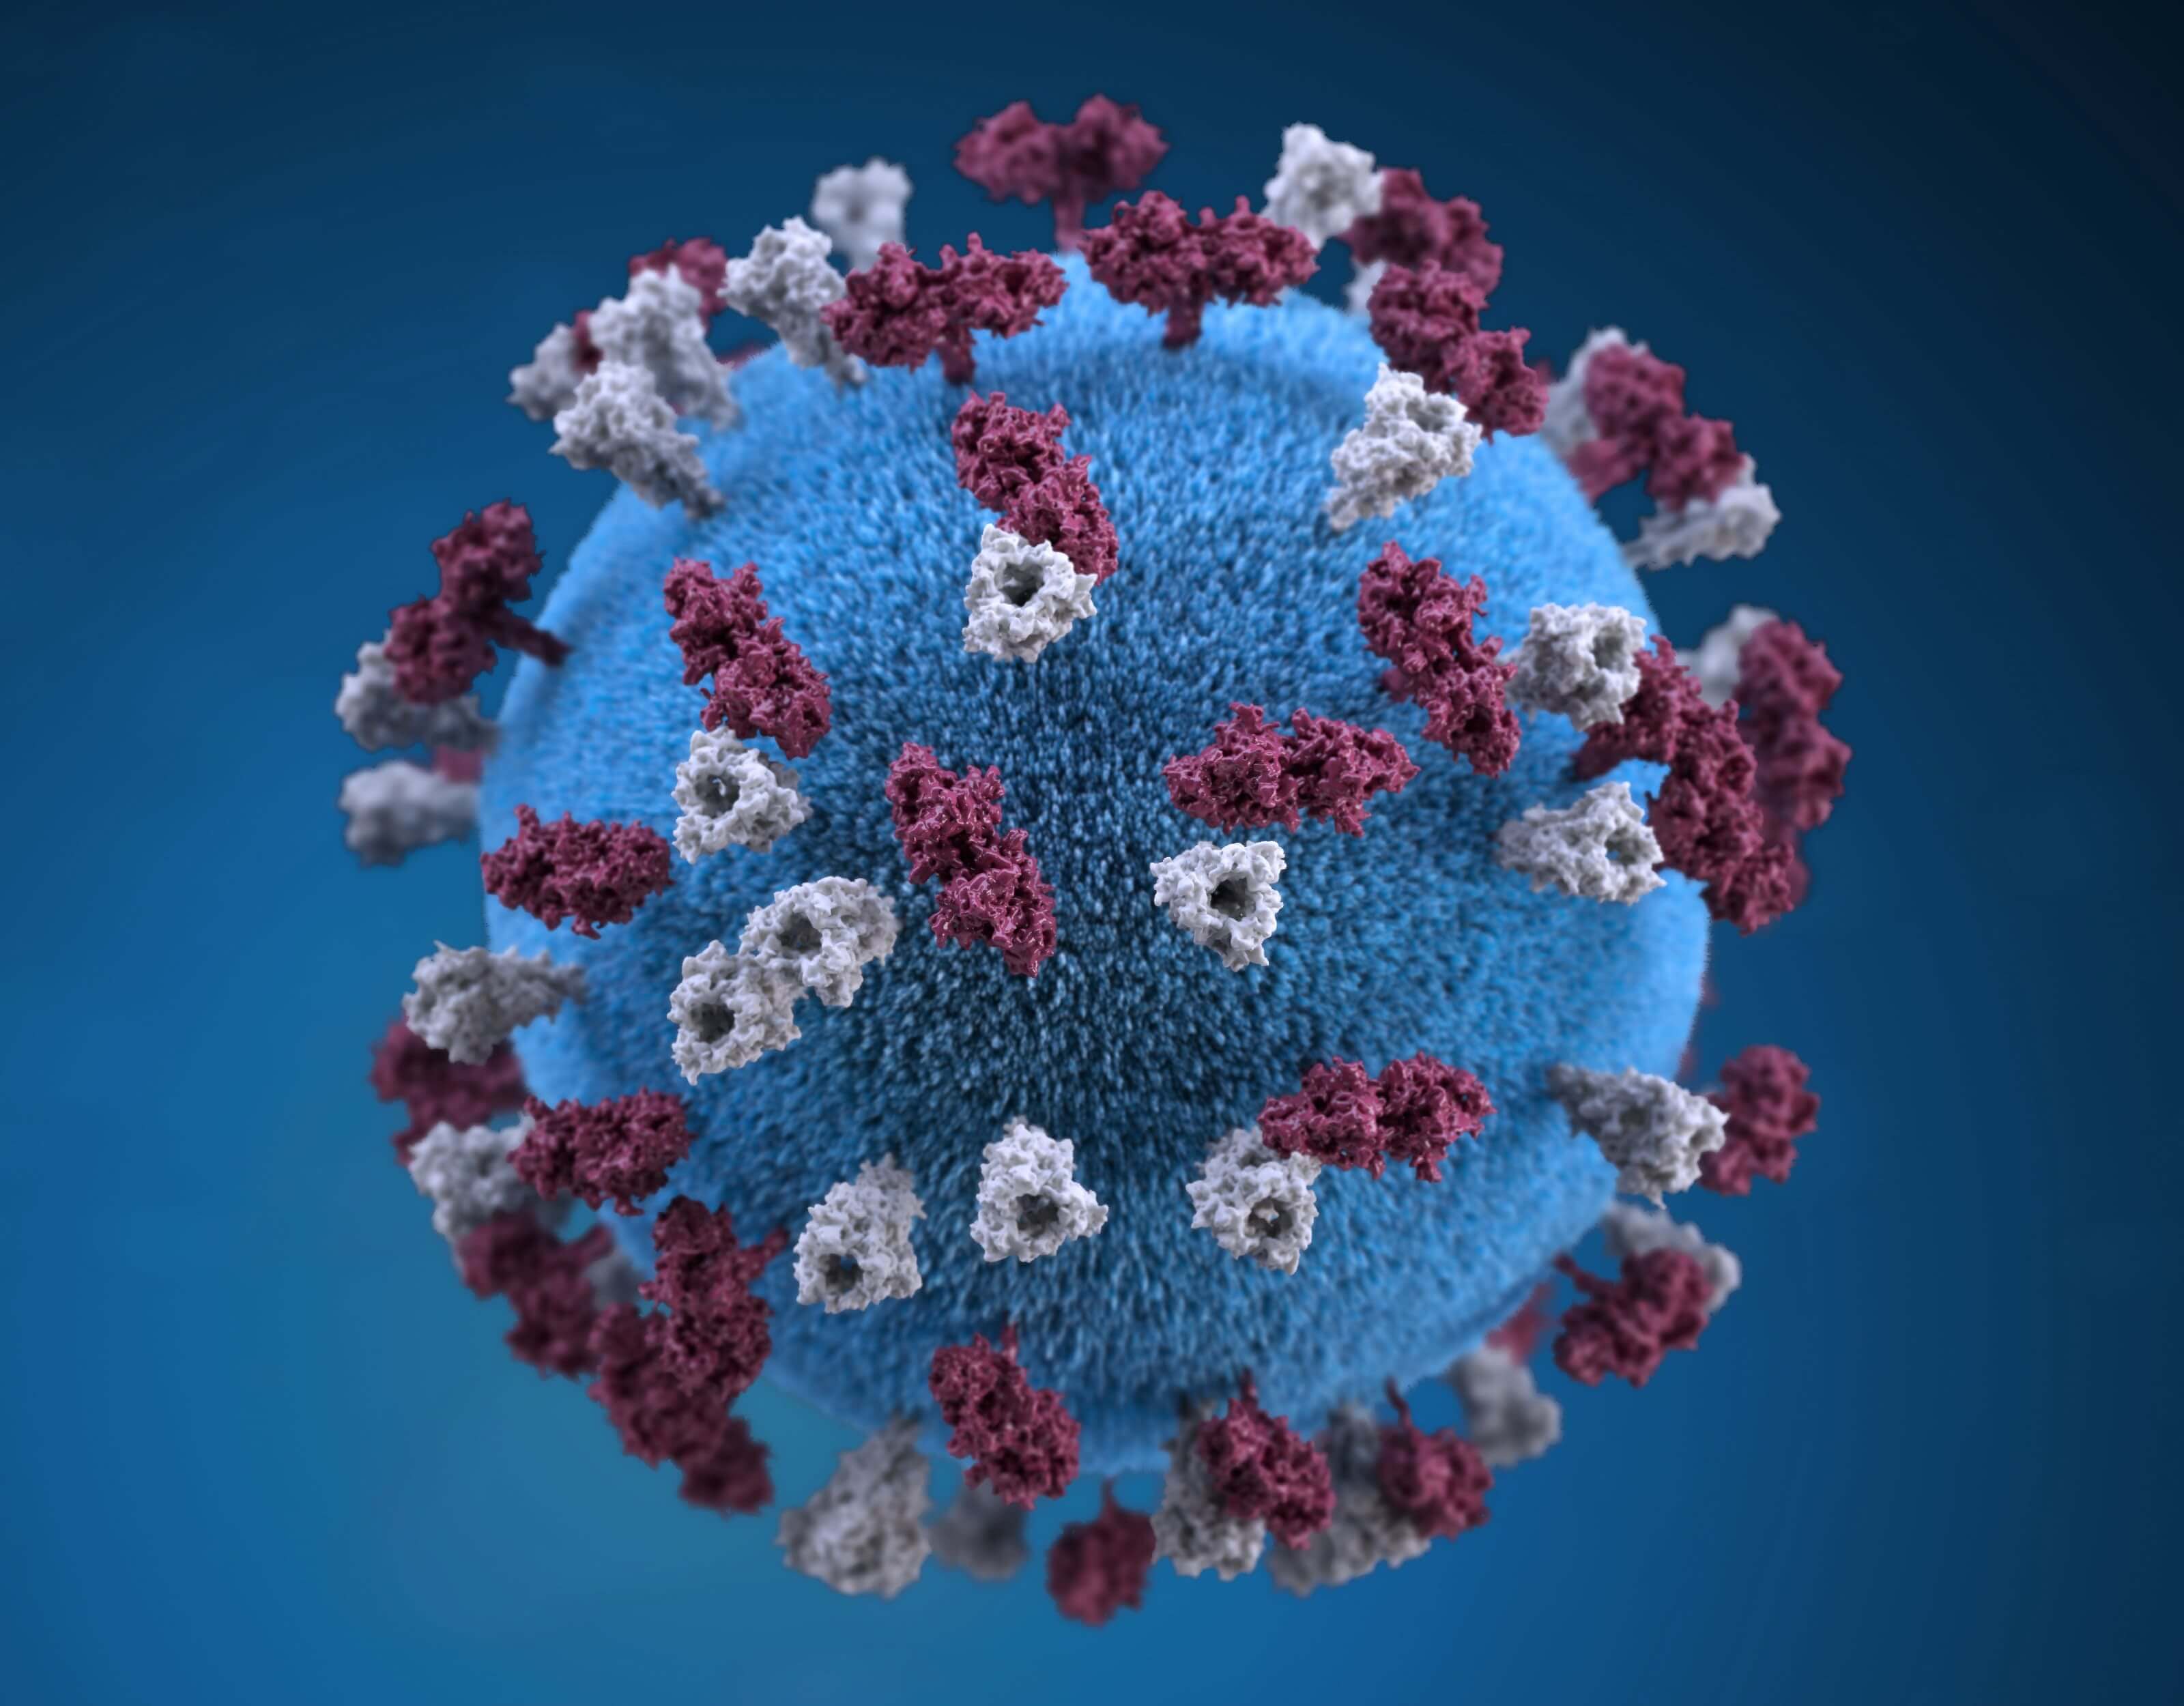 Microscopic virus